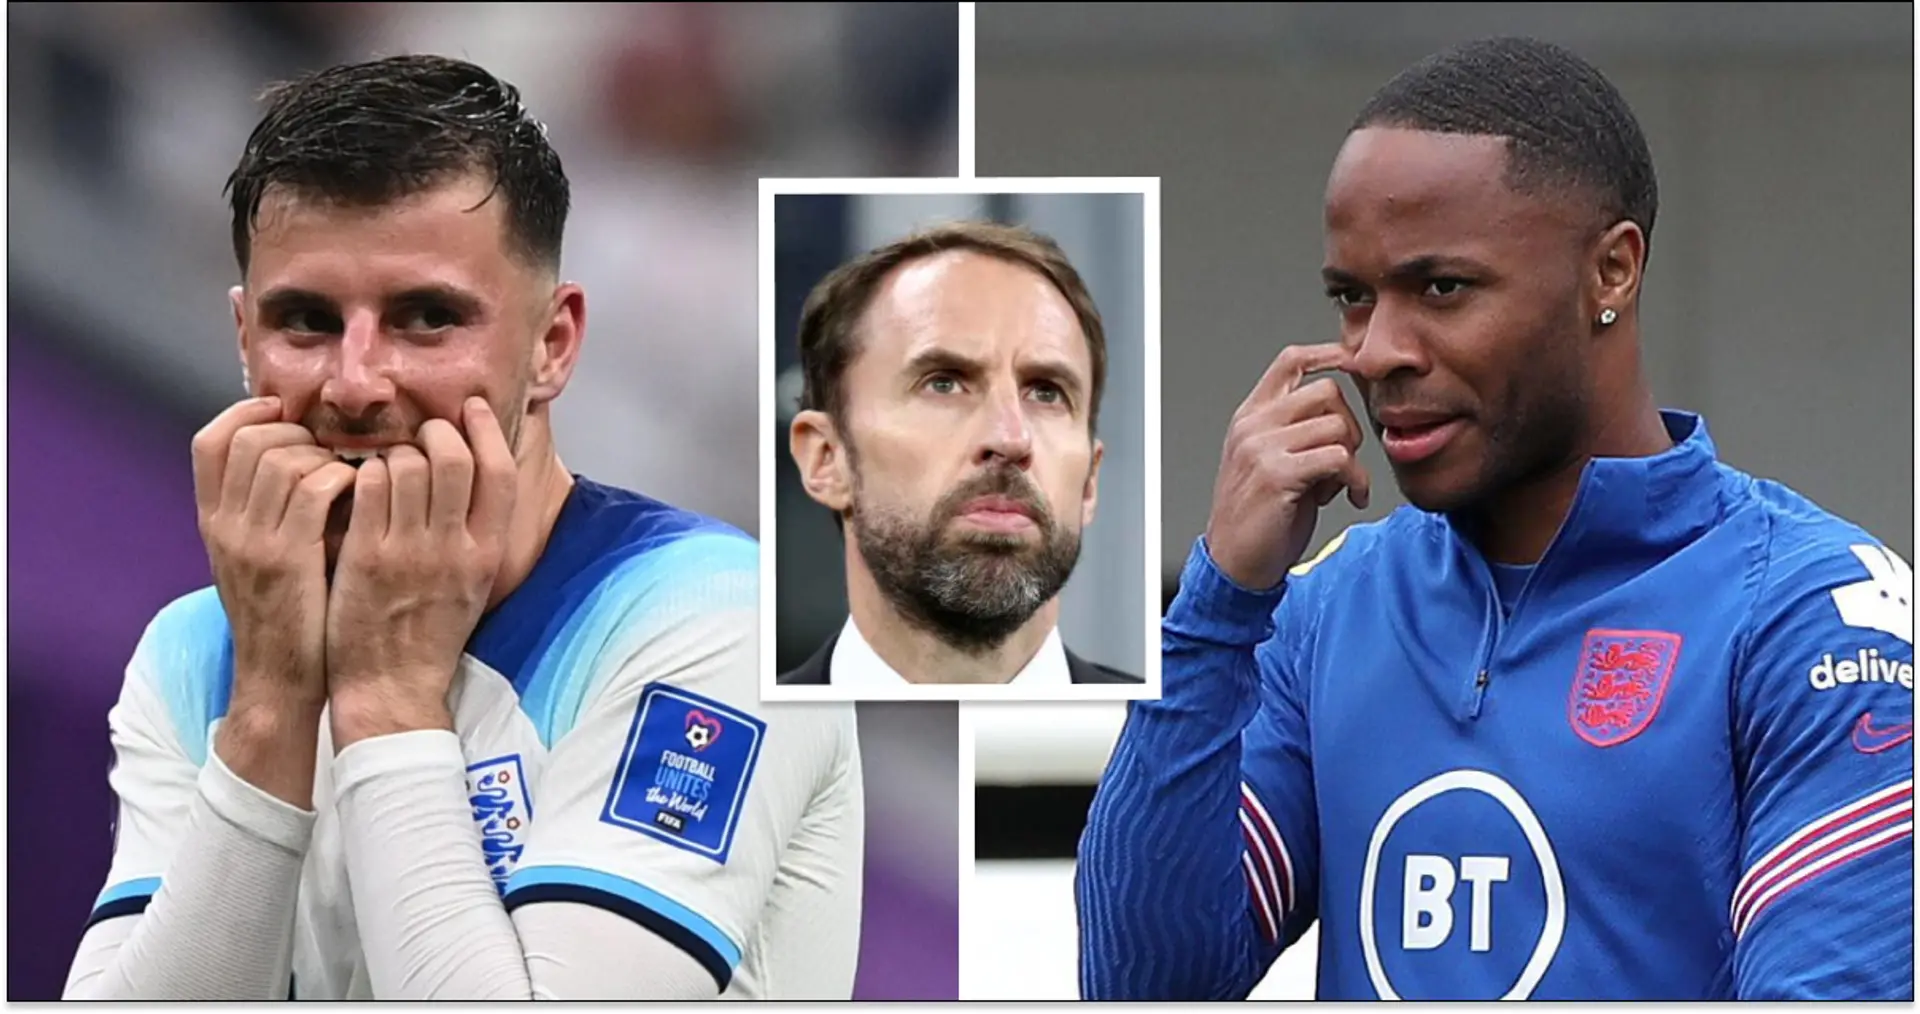 Mount, Sterling won't start for England v Senegal — The Times